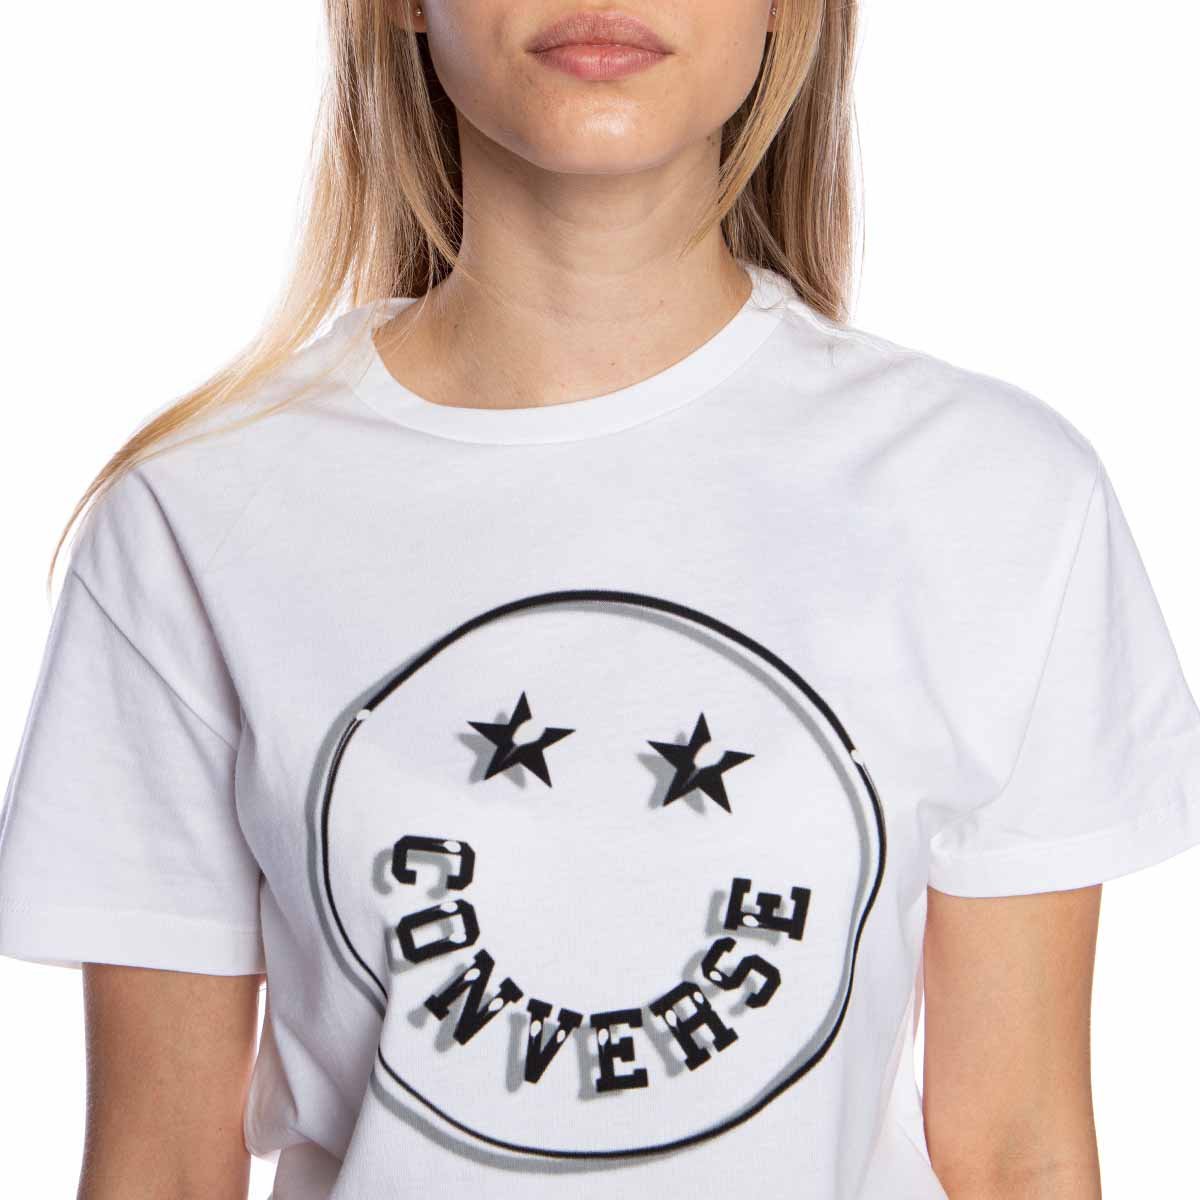 H.Camper WMNS T-shirt Tee RLX white Smiley Converse